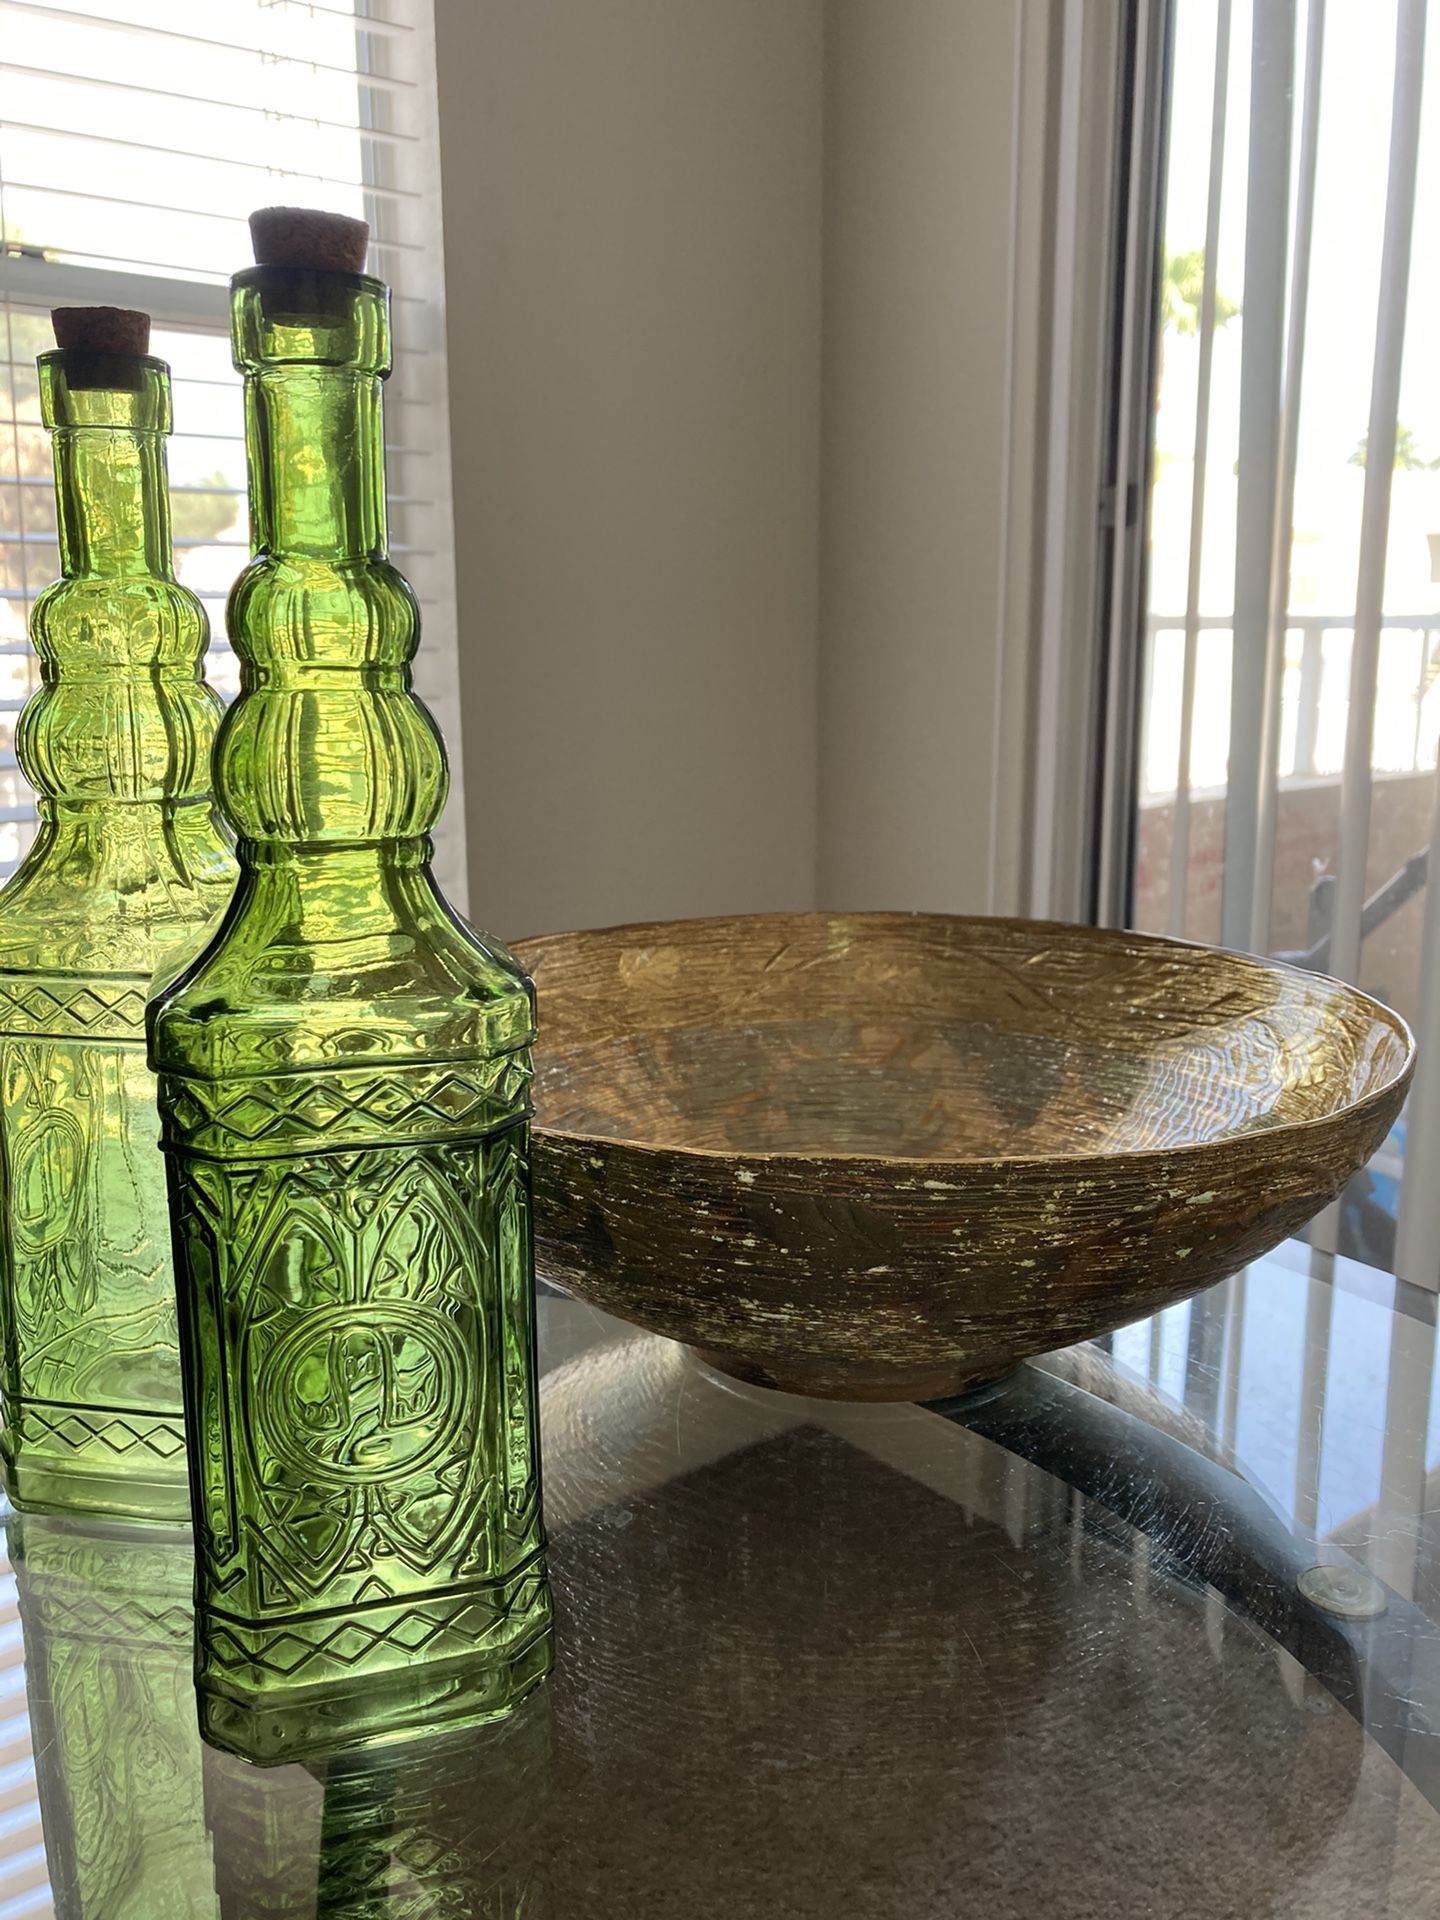 Decorative bowl, oil and vinegar jar set